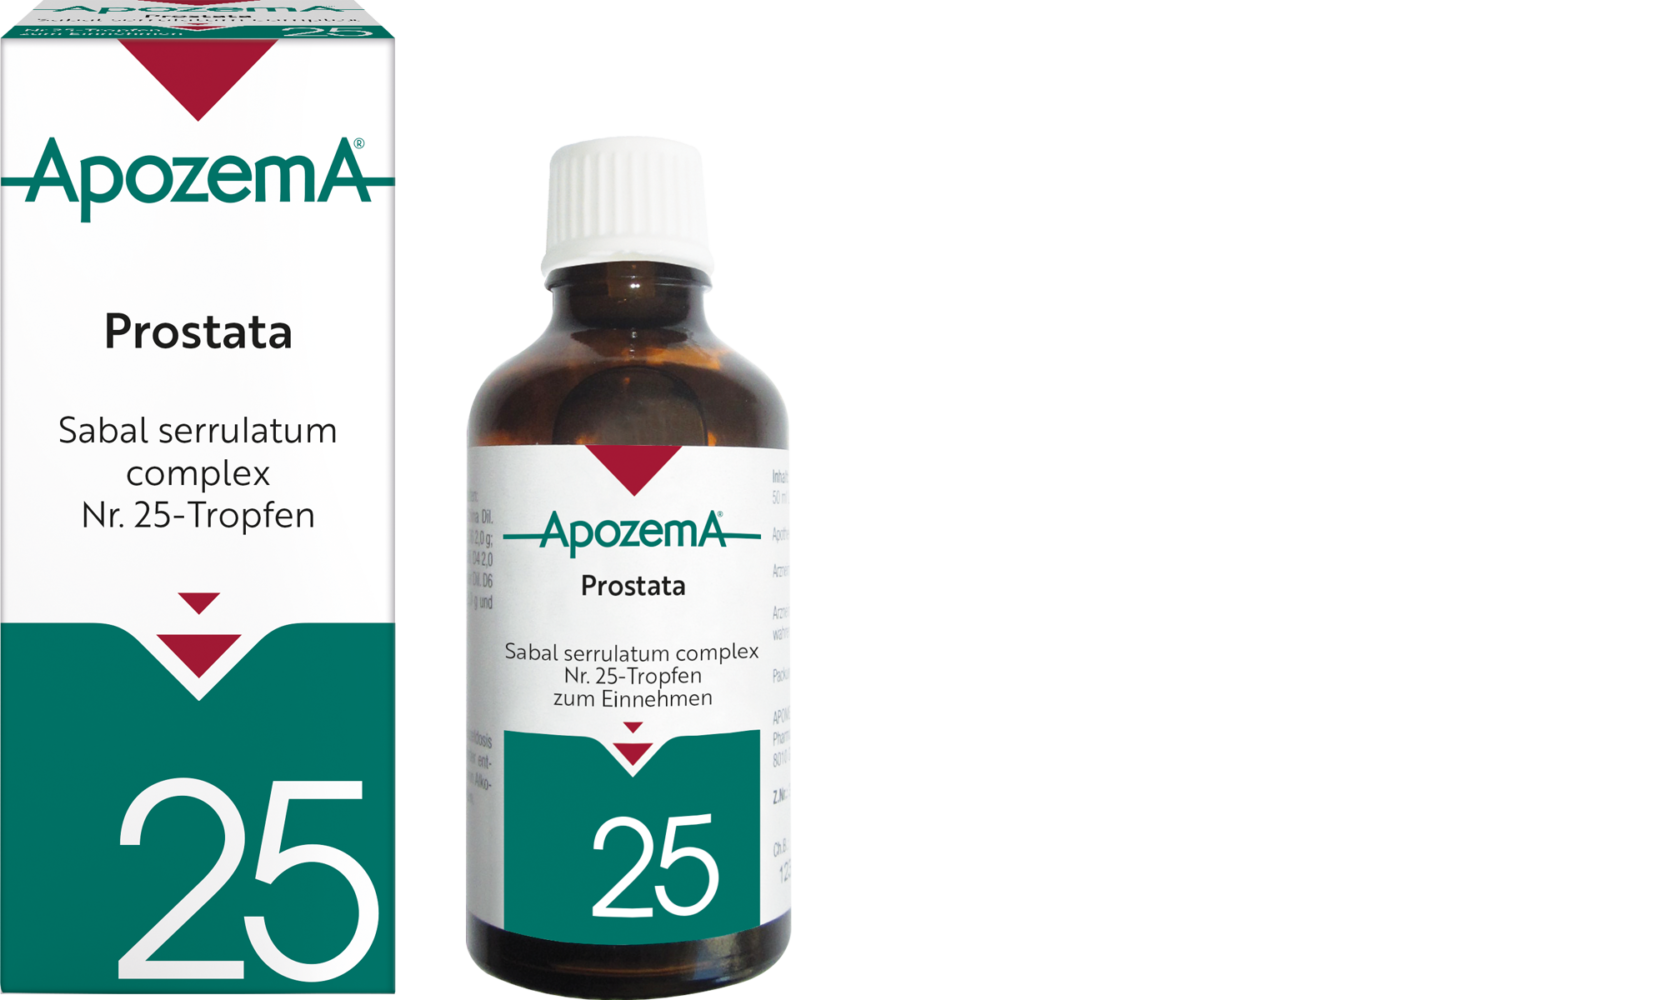 Apozema® Prostata; Sabal serrulatum complex Nr. 25-Tropfen